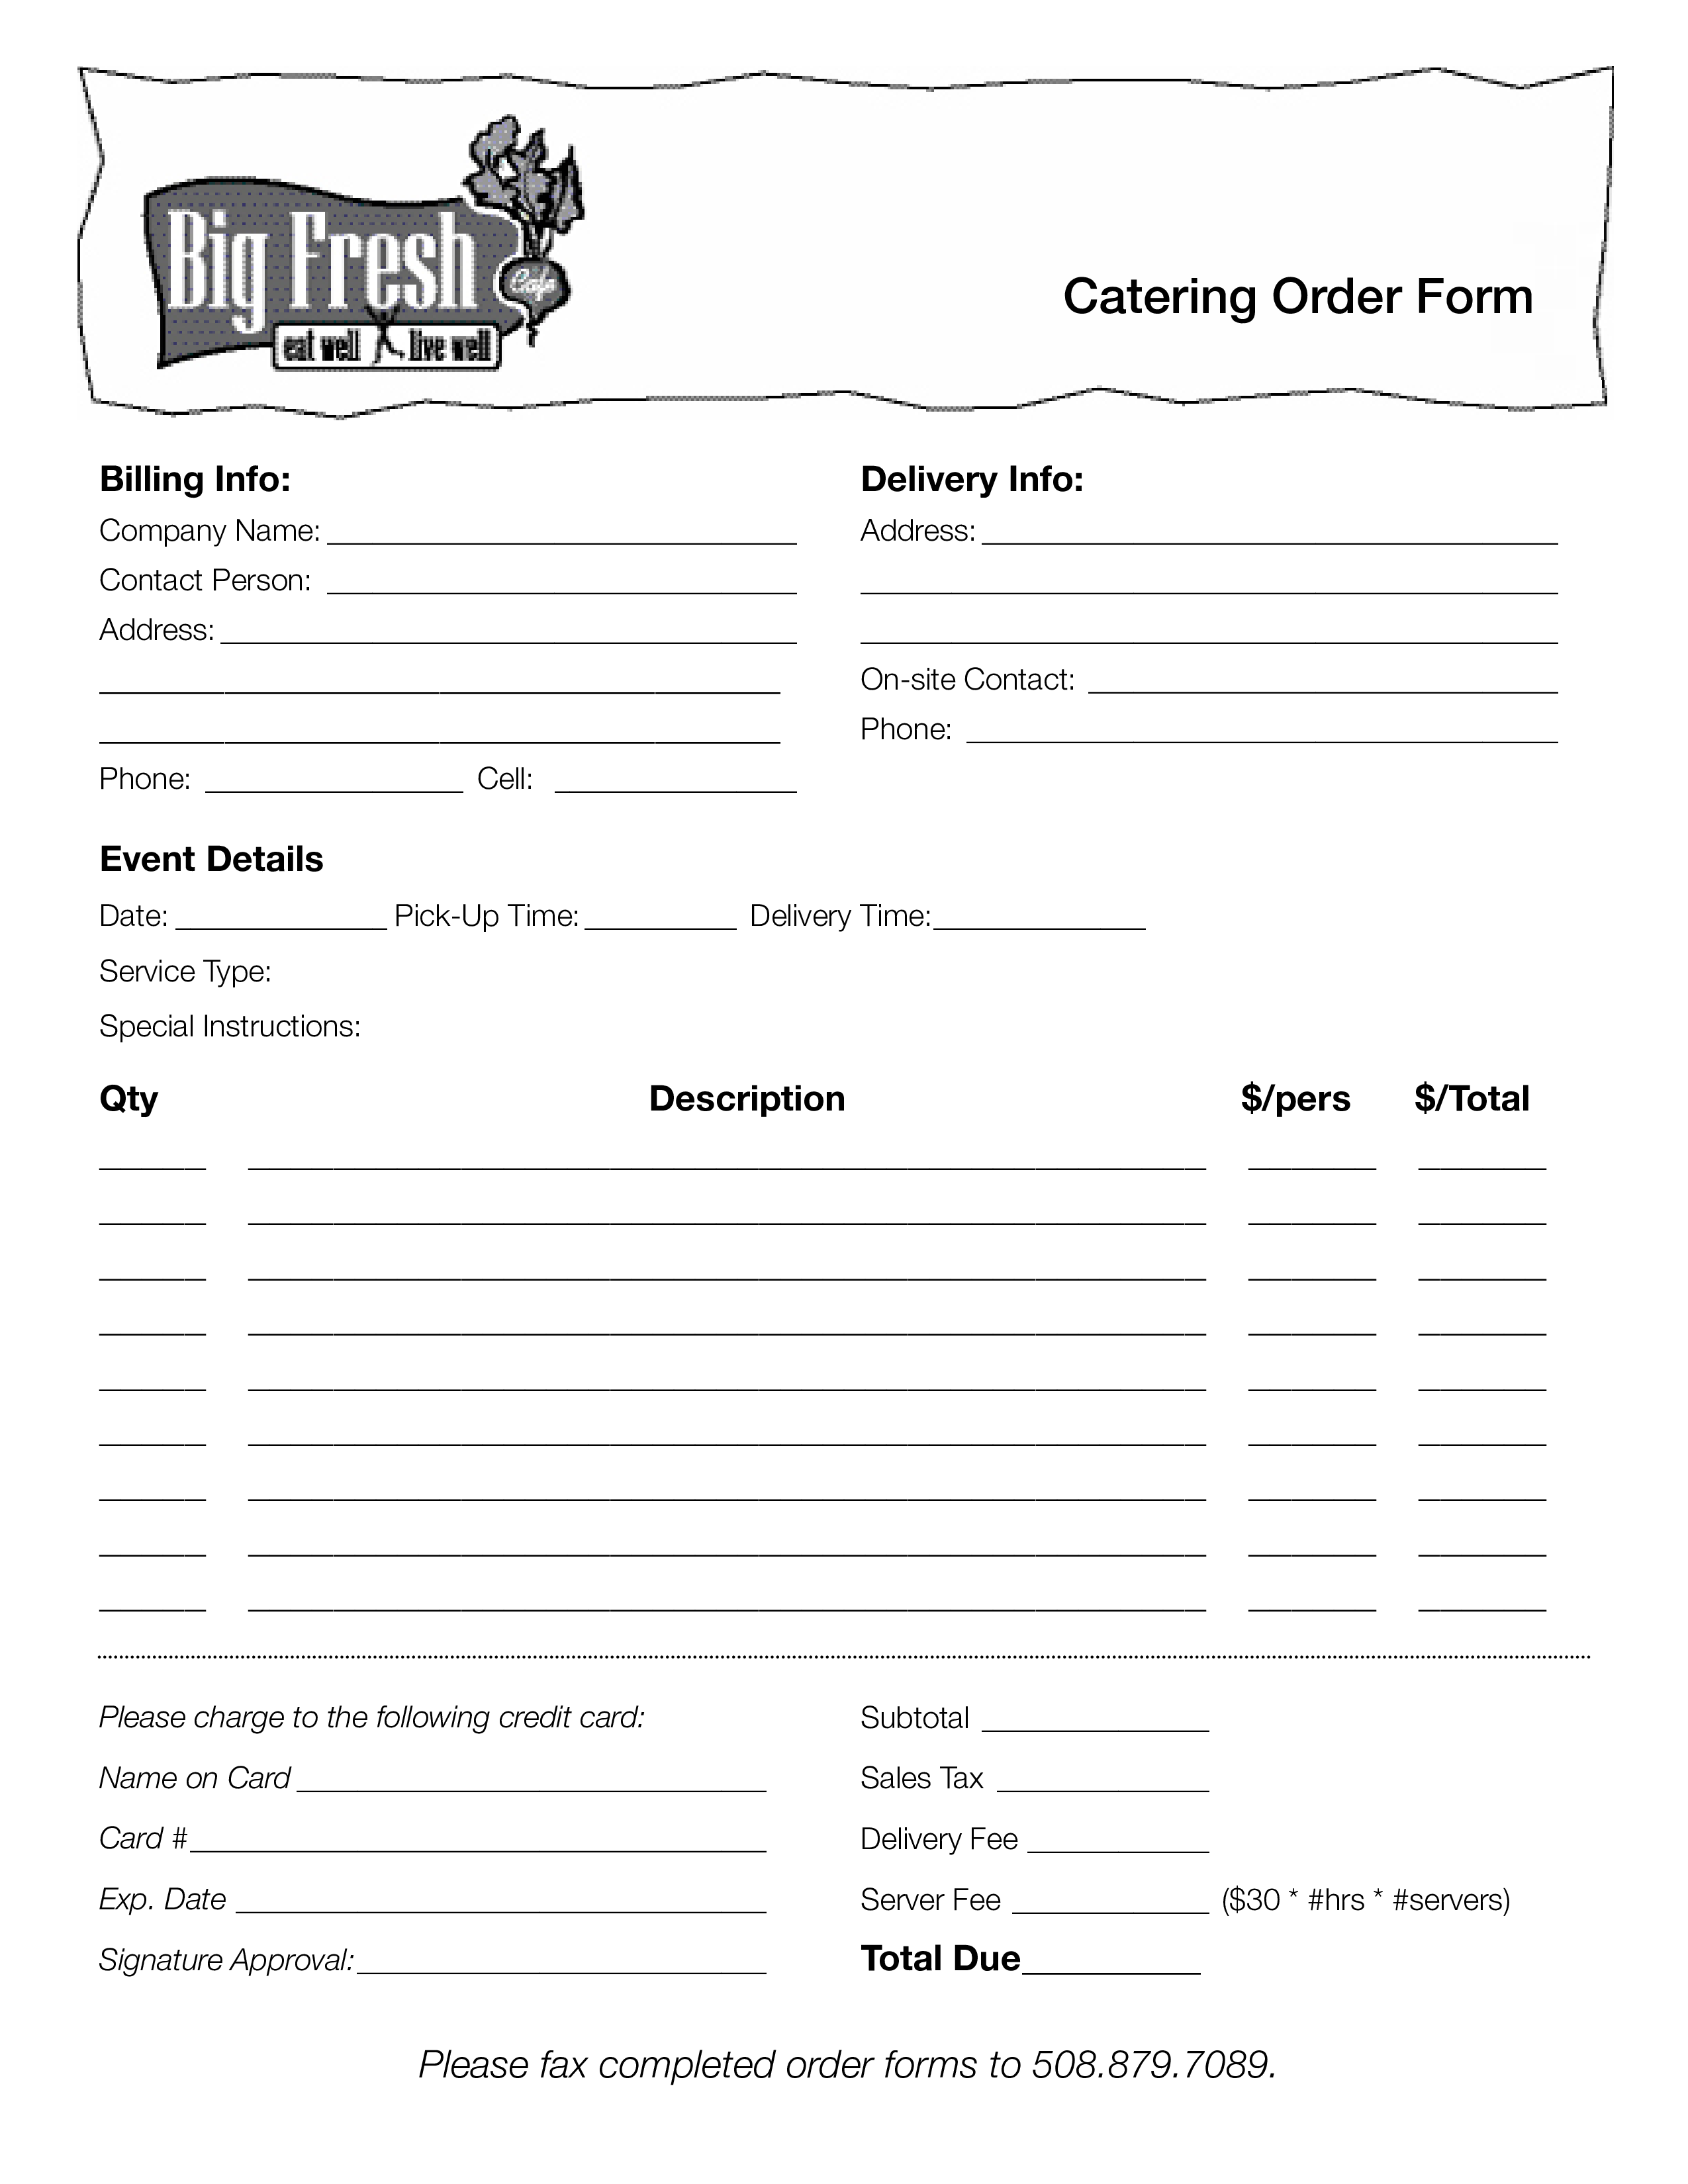 Catering Order Form Templates At Allbusinesstemplates Com